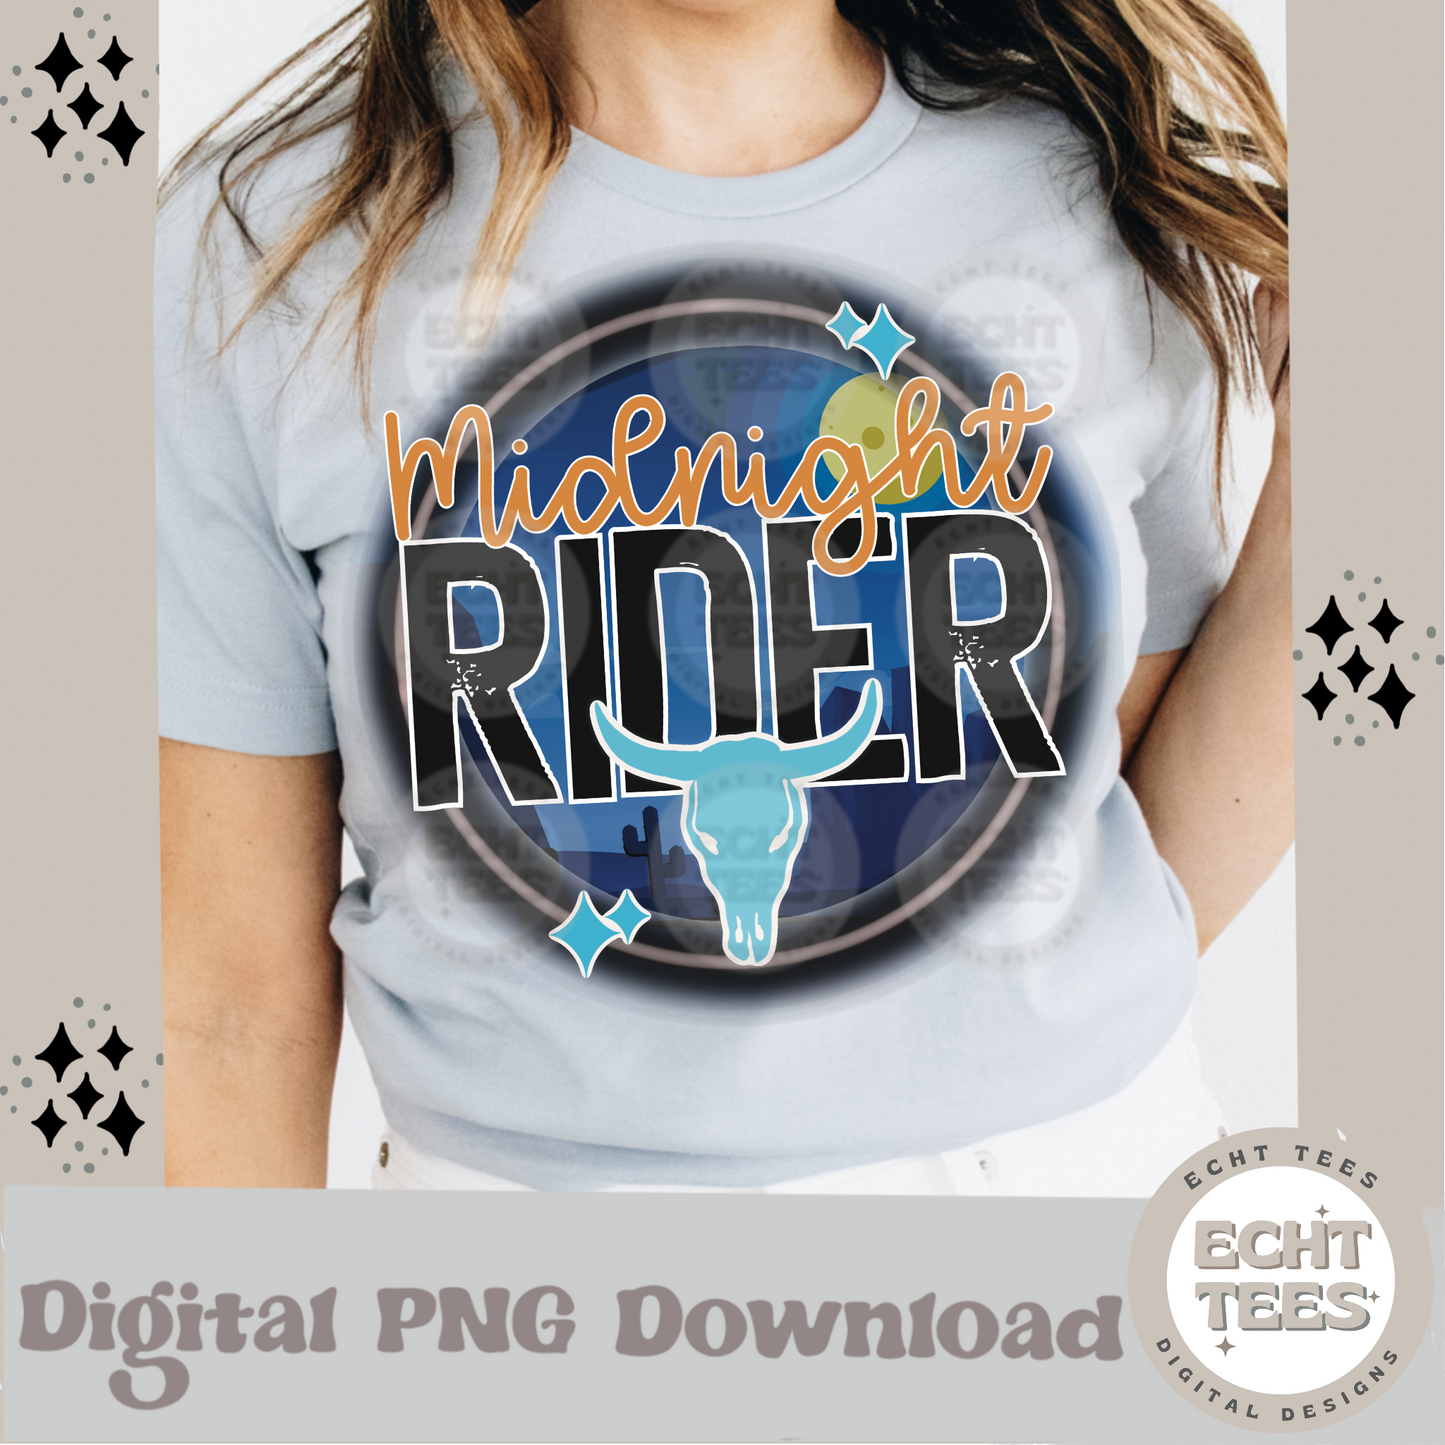 Midnight Rider PNG Digital Download